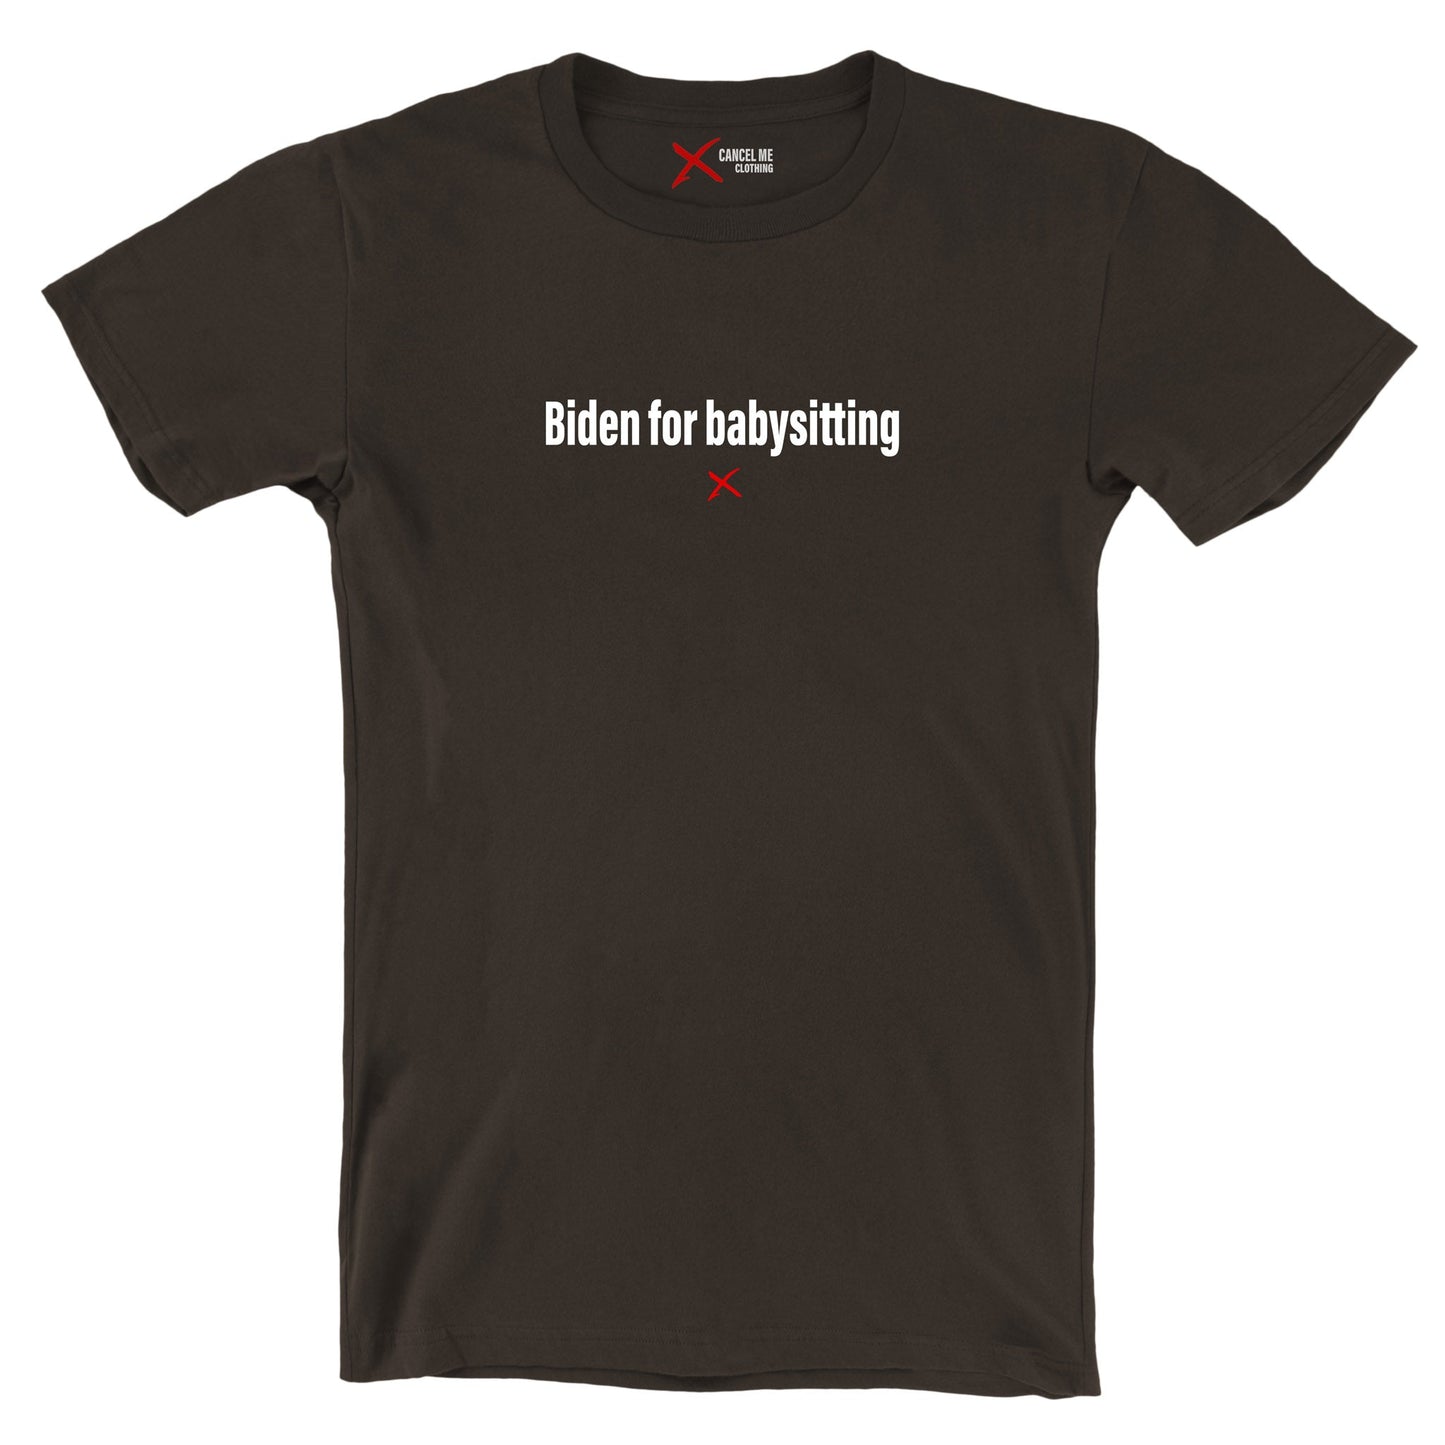 Biden for babysitting - Shirt